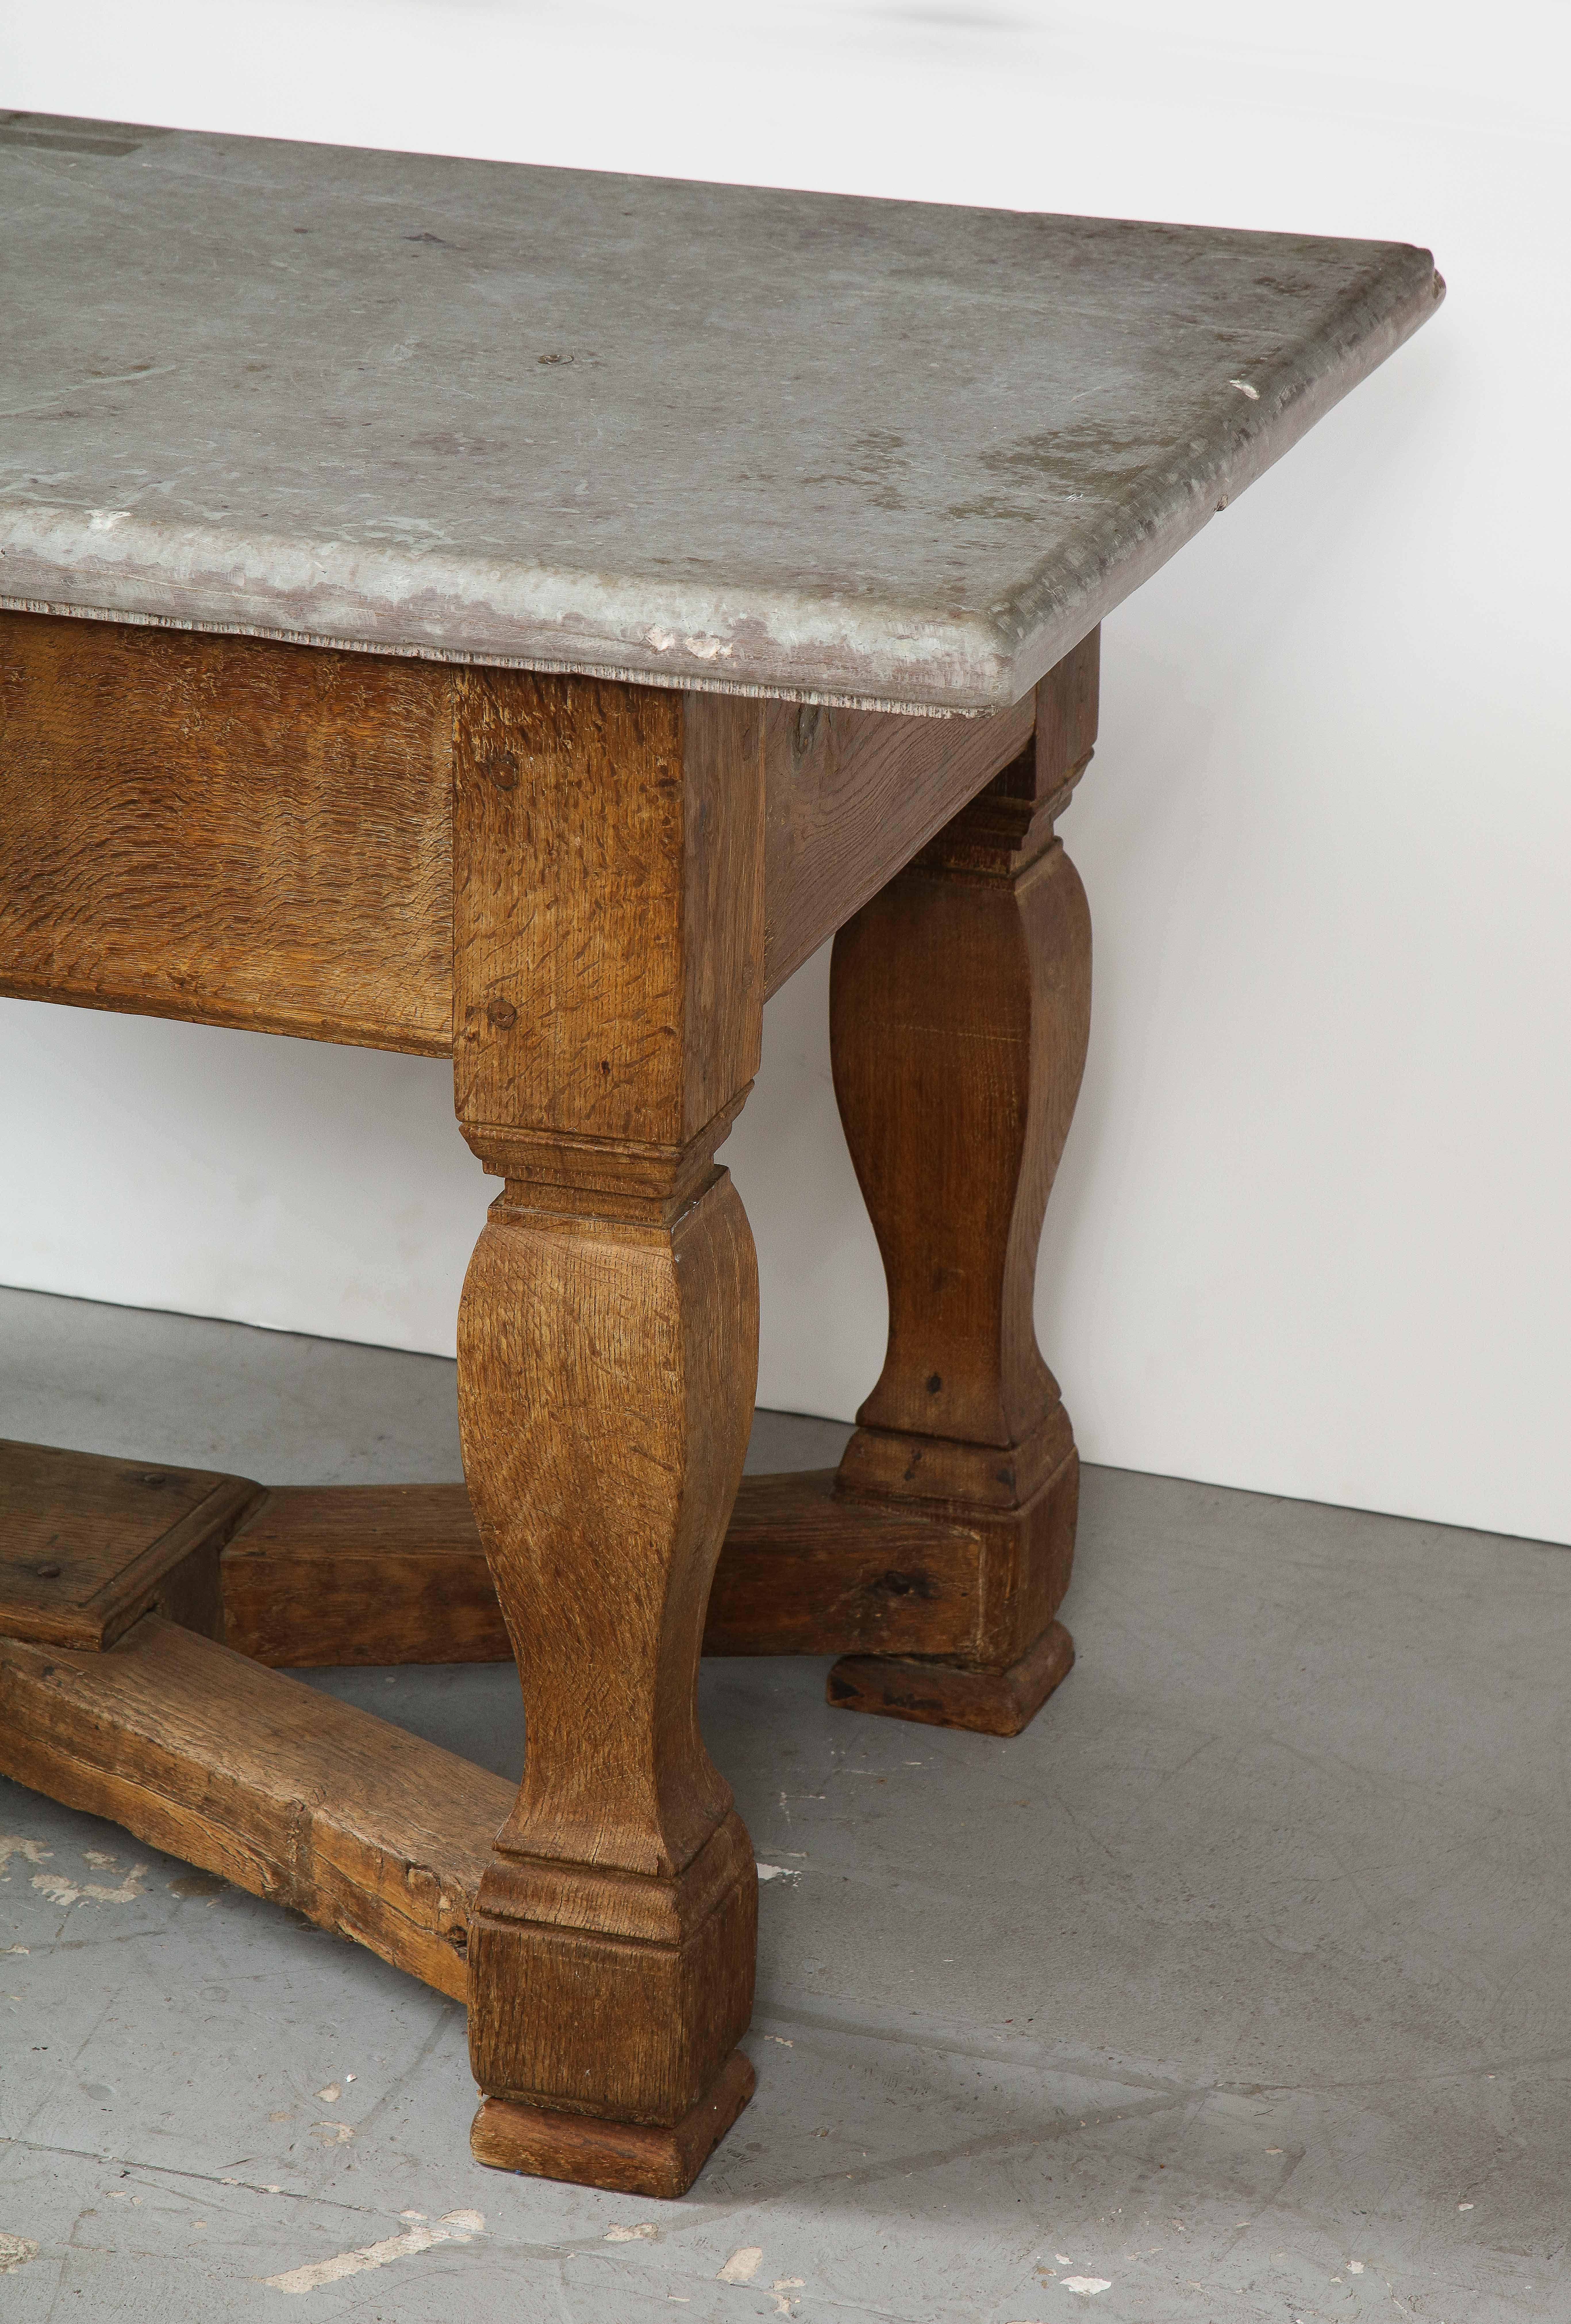  18th C. Swedish Stone Top Table w/ Drawer & Oak Stretcher Base, Sweden, c. 1750 5